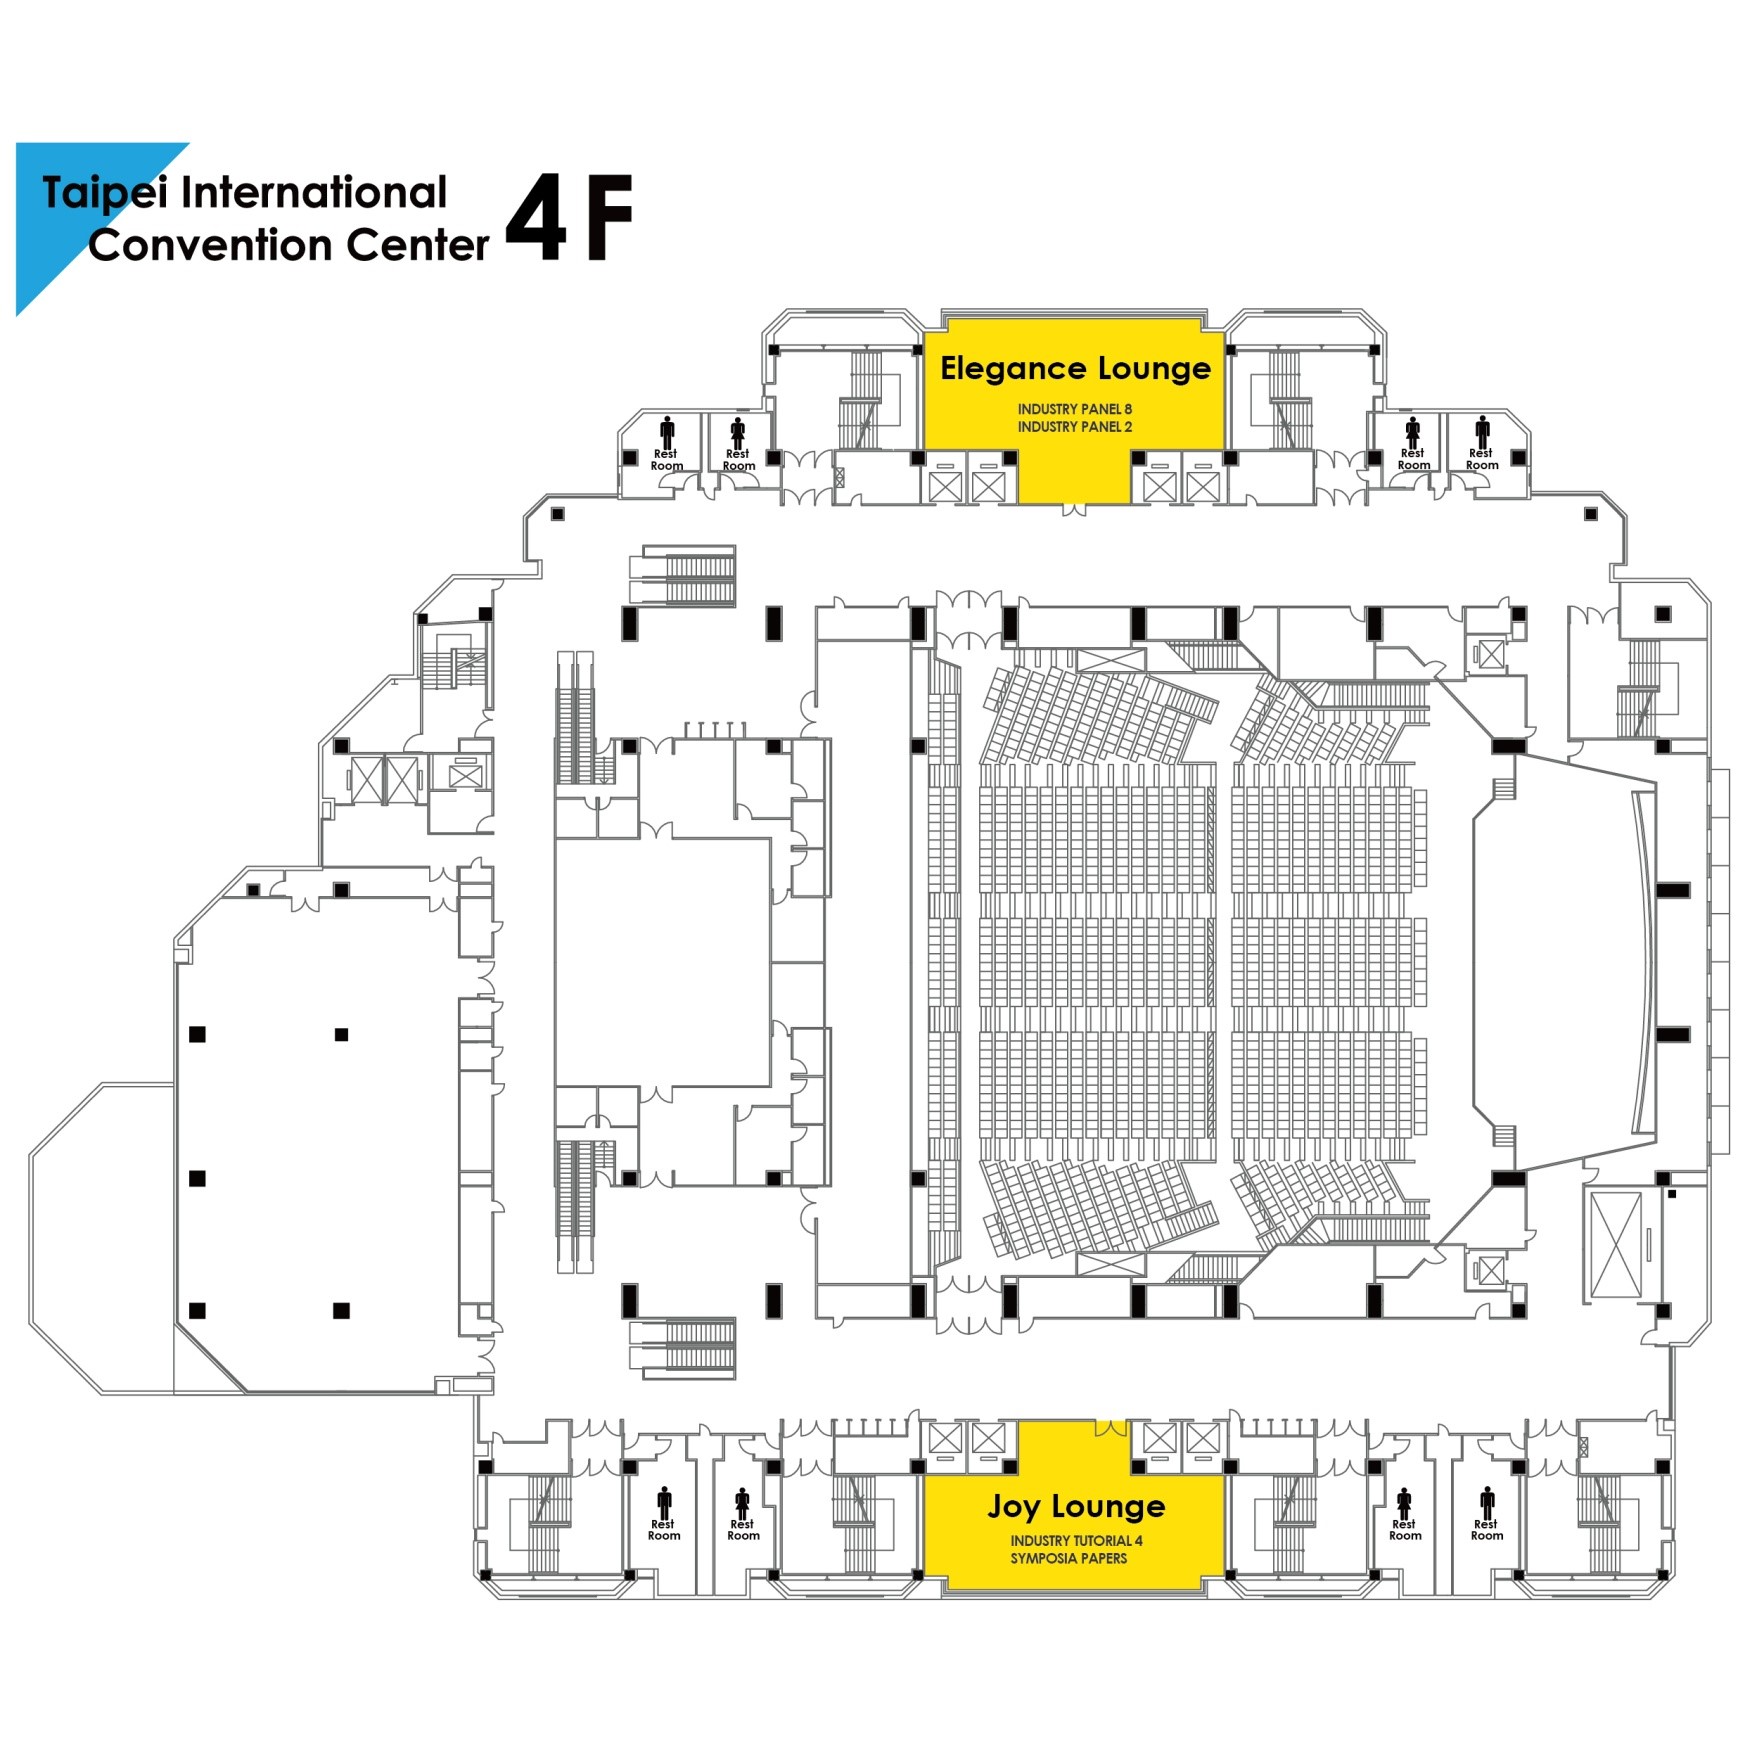 TICC Venue Floor Map 4F